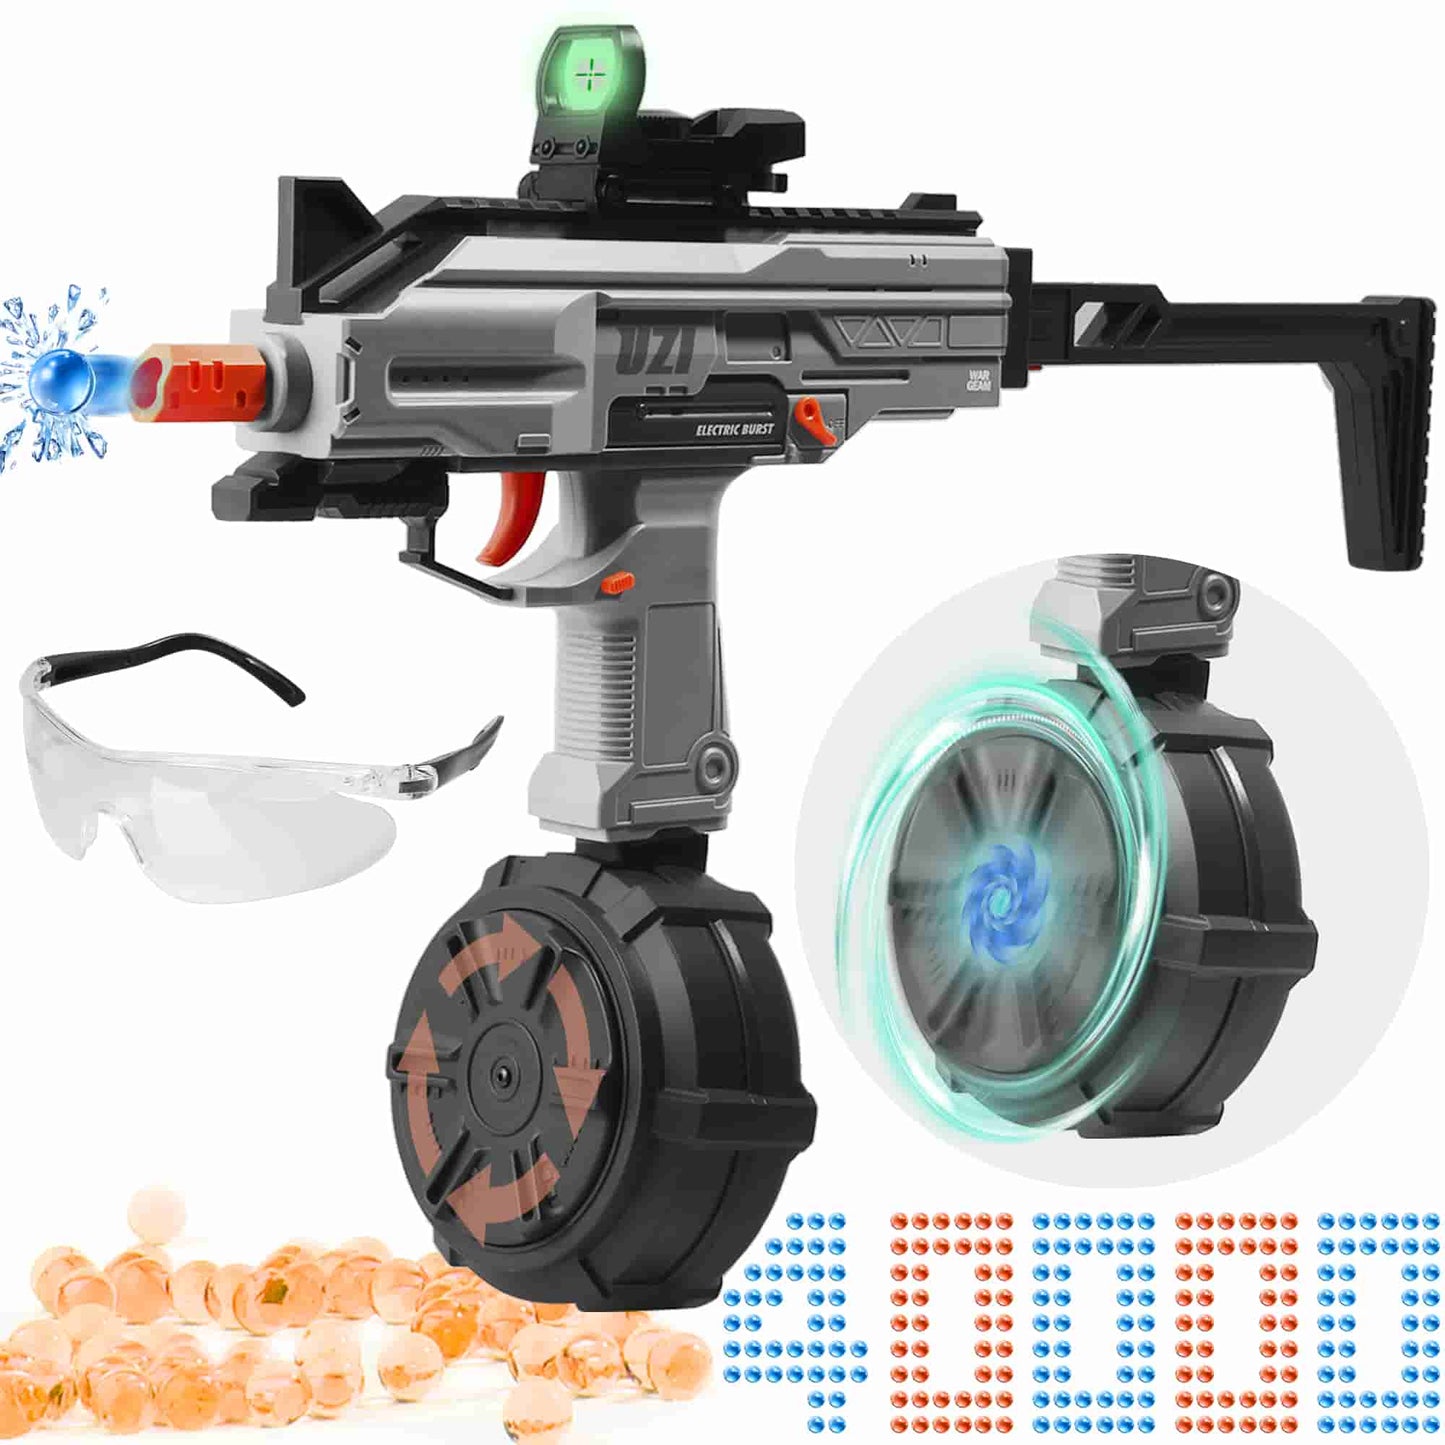 Caissa Uzi Automatic Gel Ball Blaster Gun Pistol with High Capacity Drum caissatoy